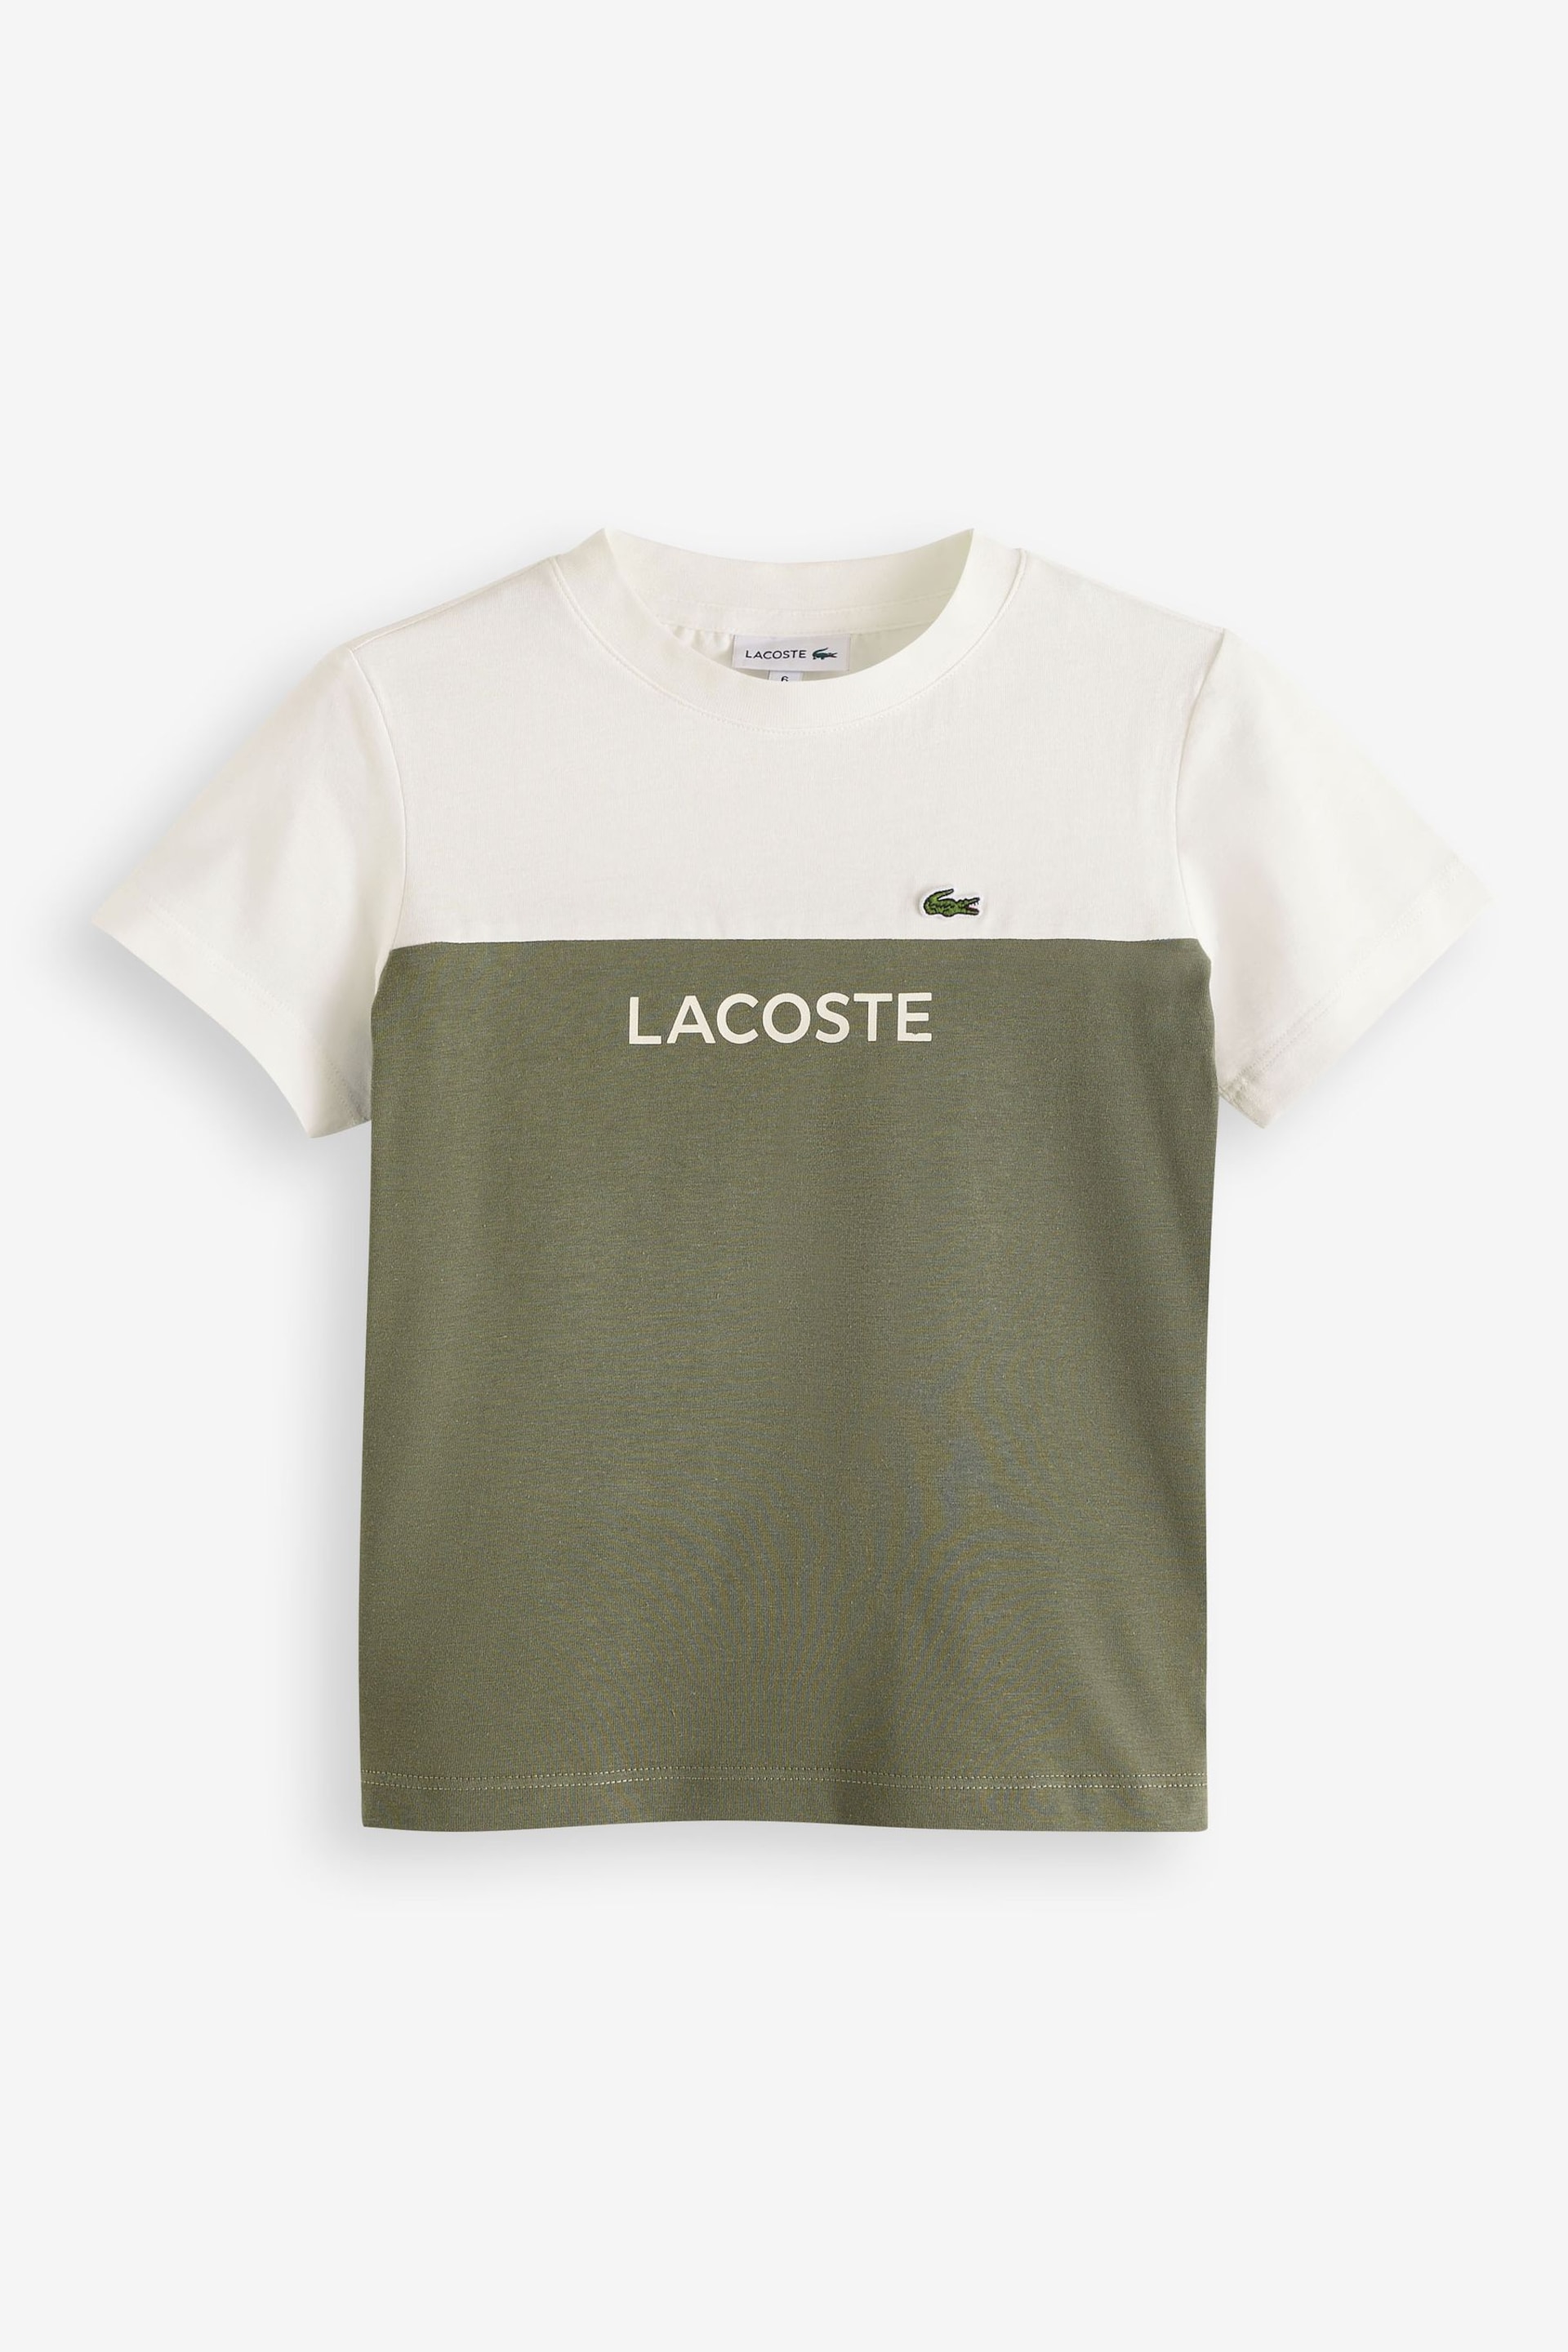 Lacoste Childrens Colourblock Cotton Logo T-Shirt - Image 1 of 3